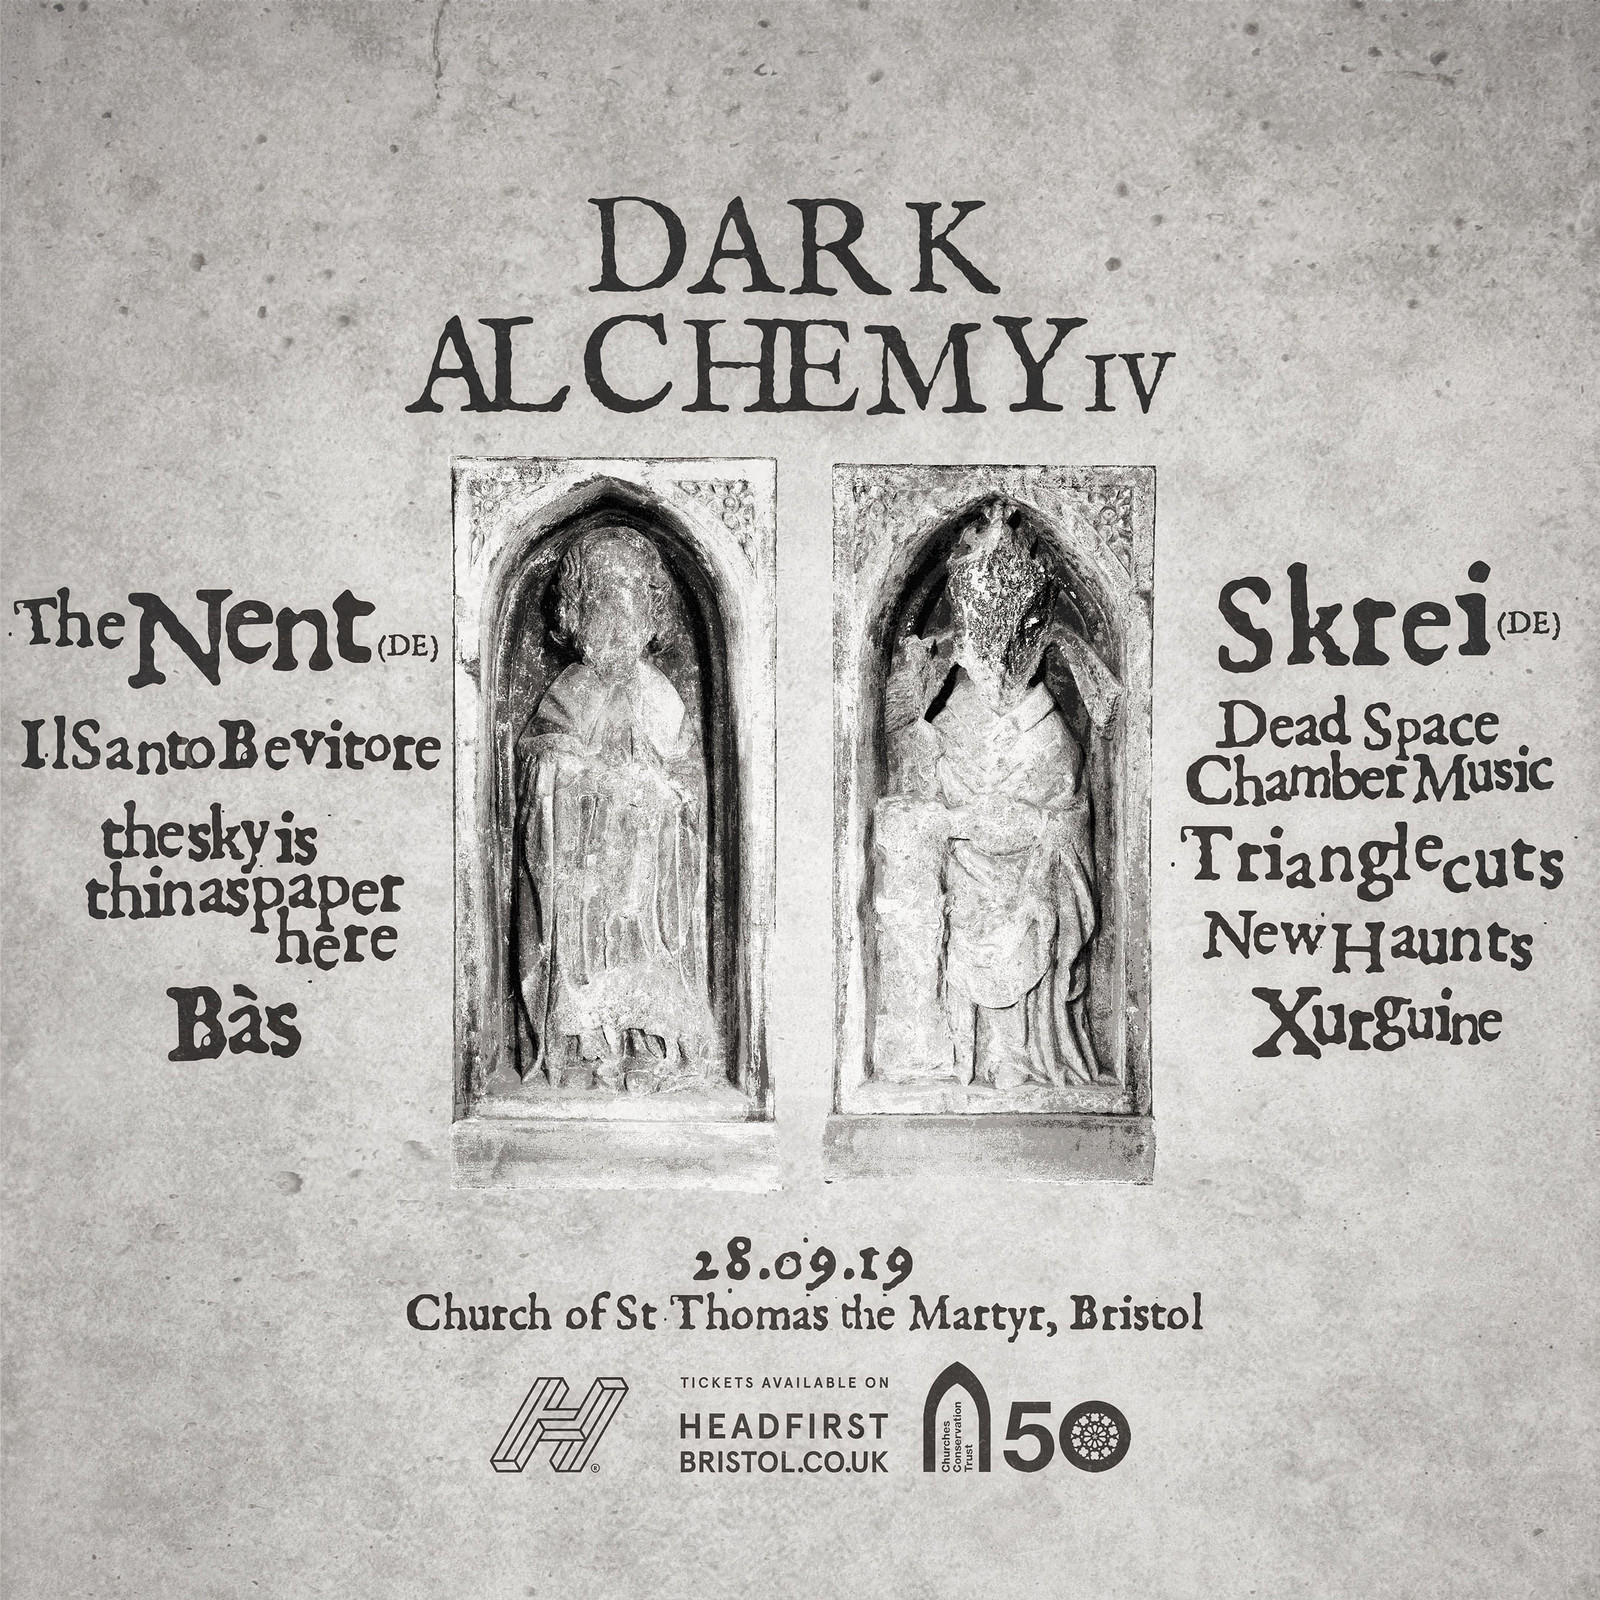 Dark Alchemy IV at St Thomas the Martyr Church